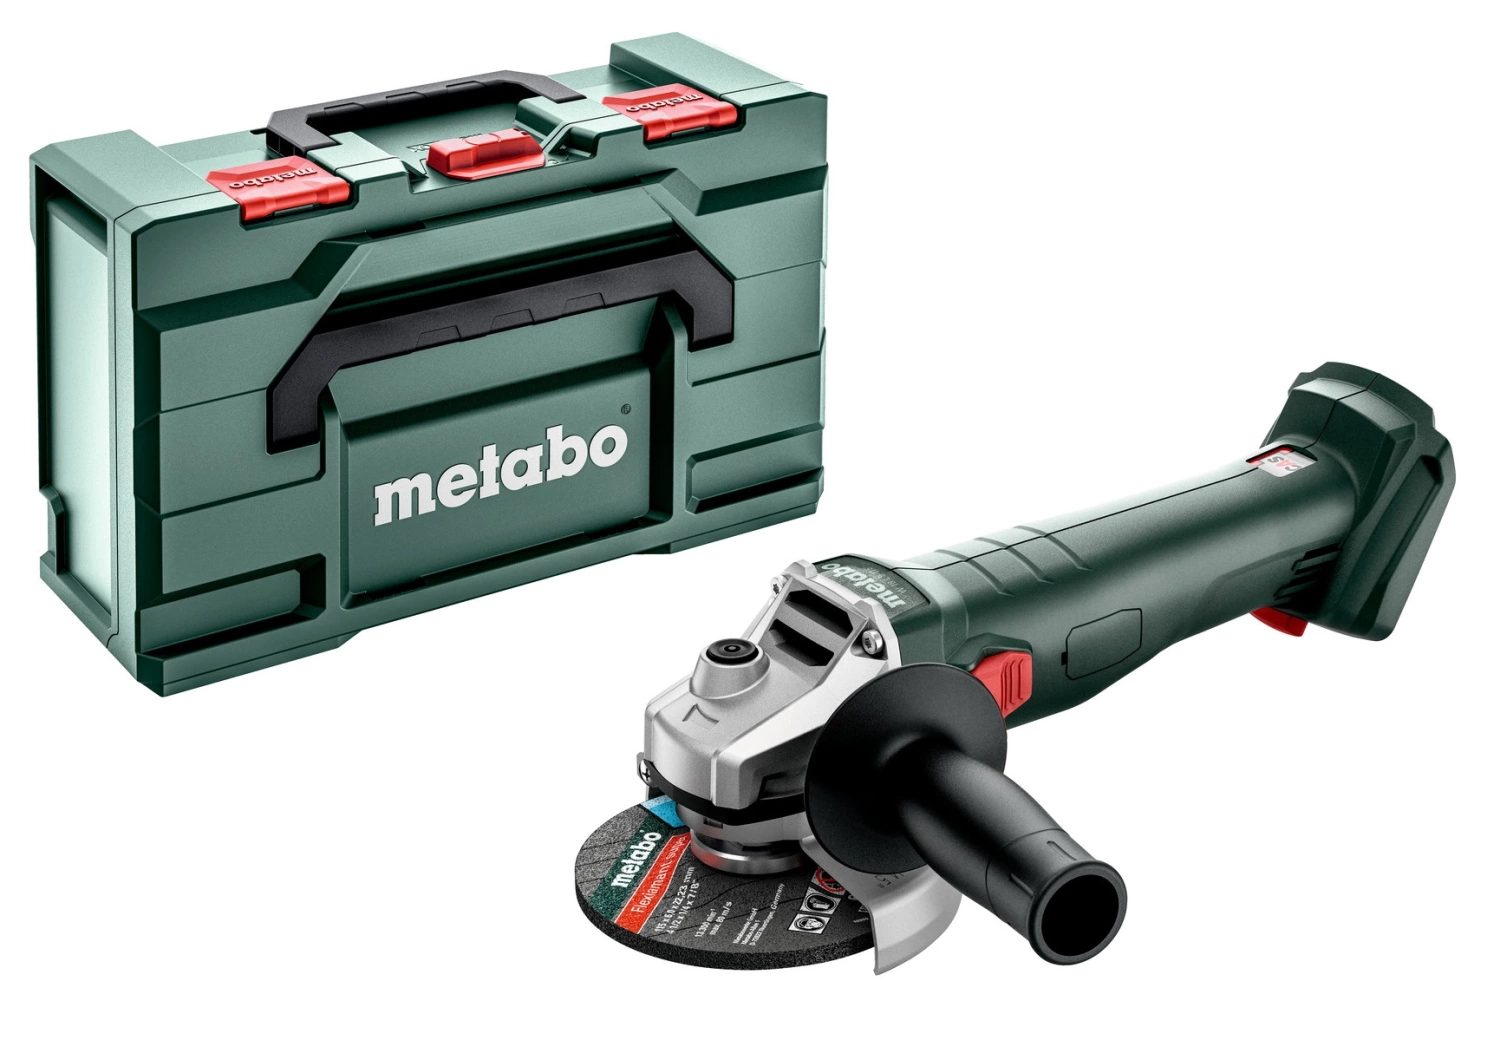 Metabo W 18 L 9-115 18V LiHD accu haakse slijper body in MetaBox - 115mm-image